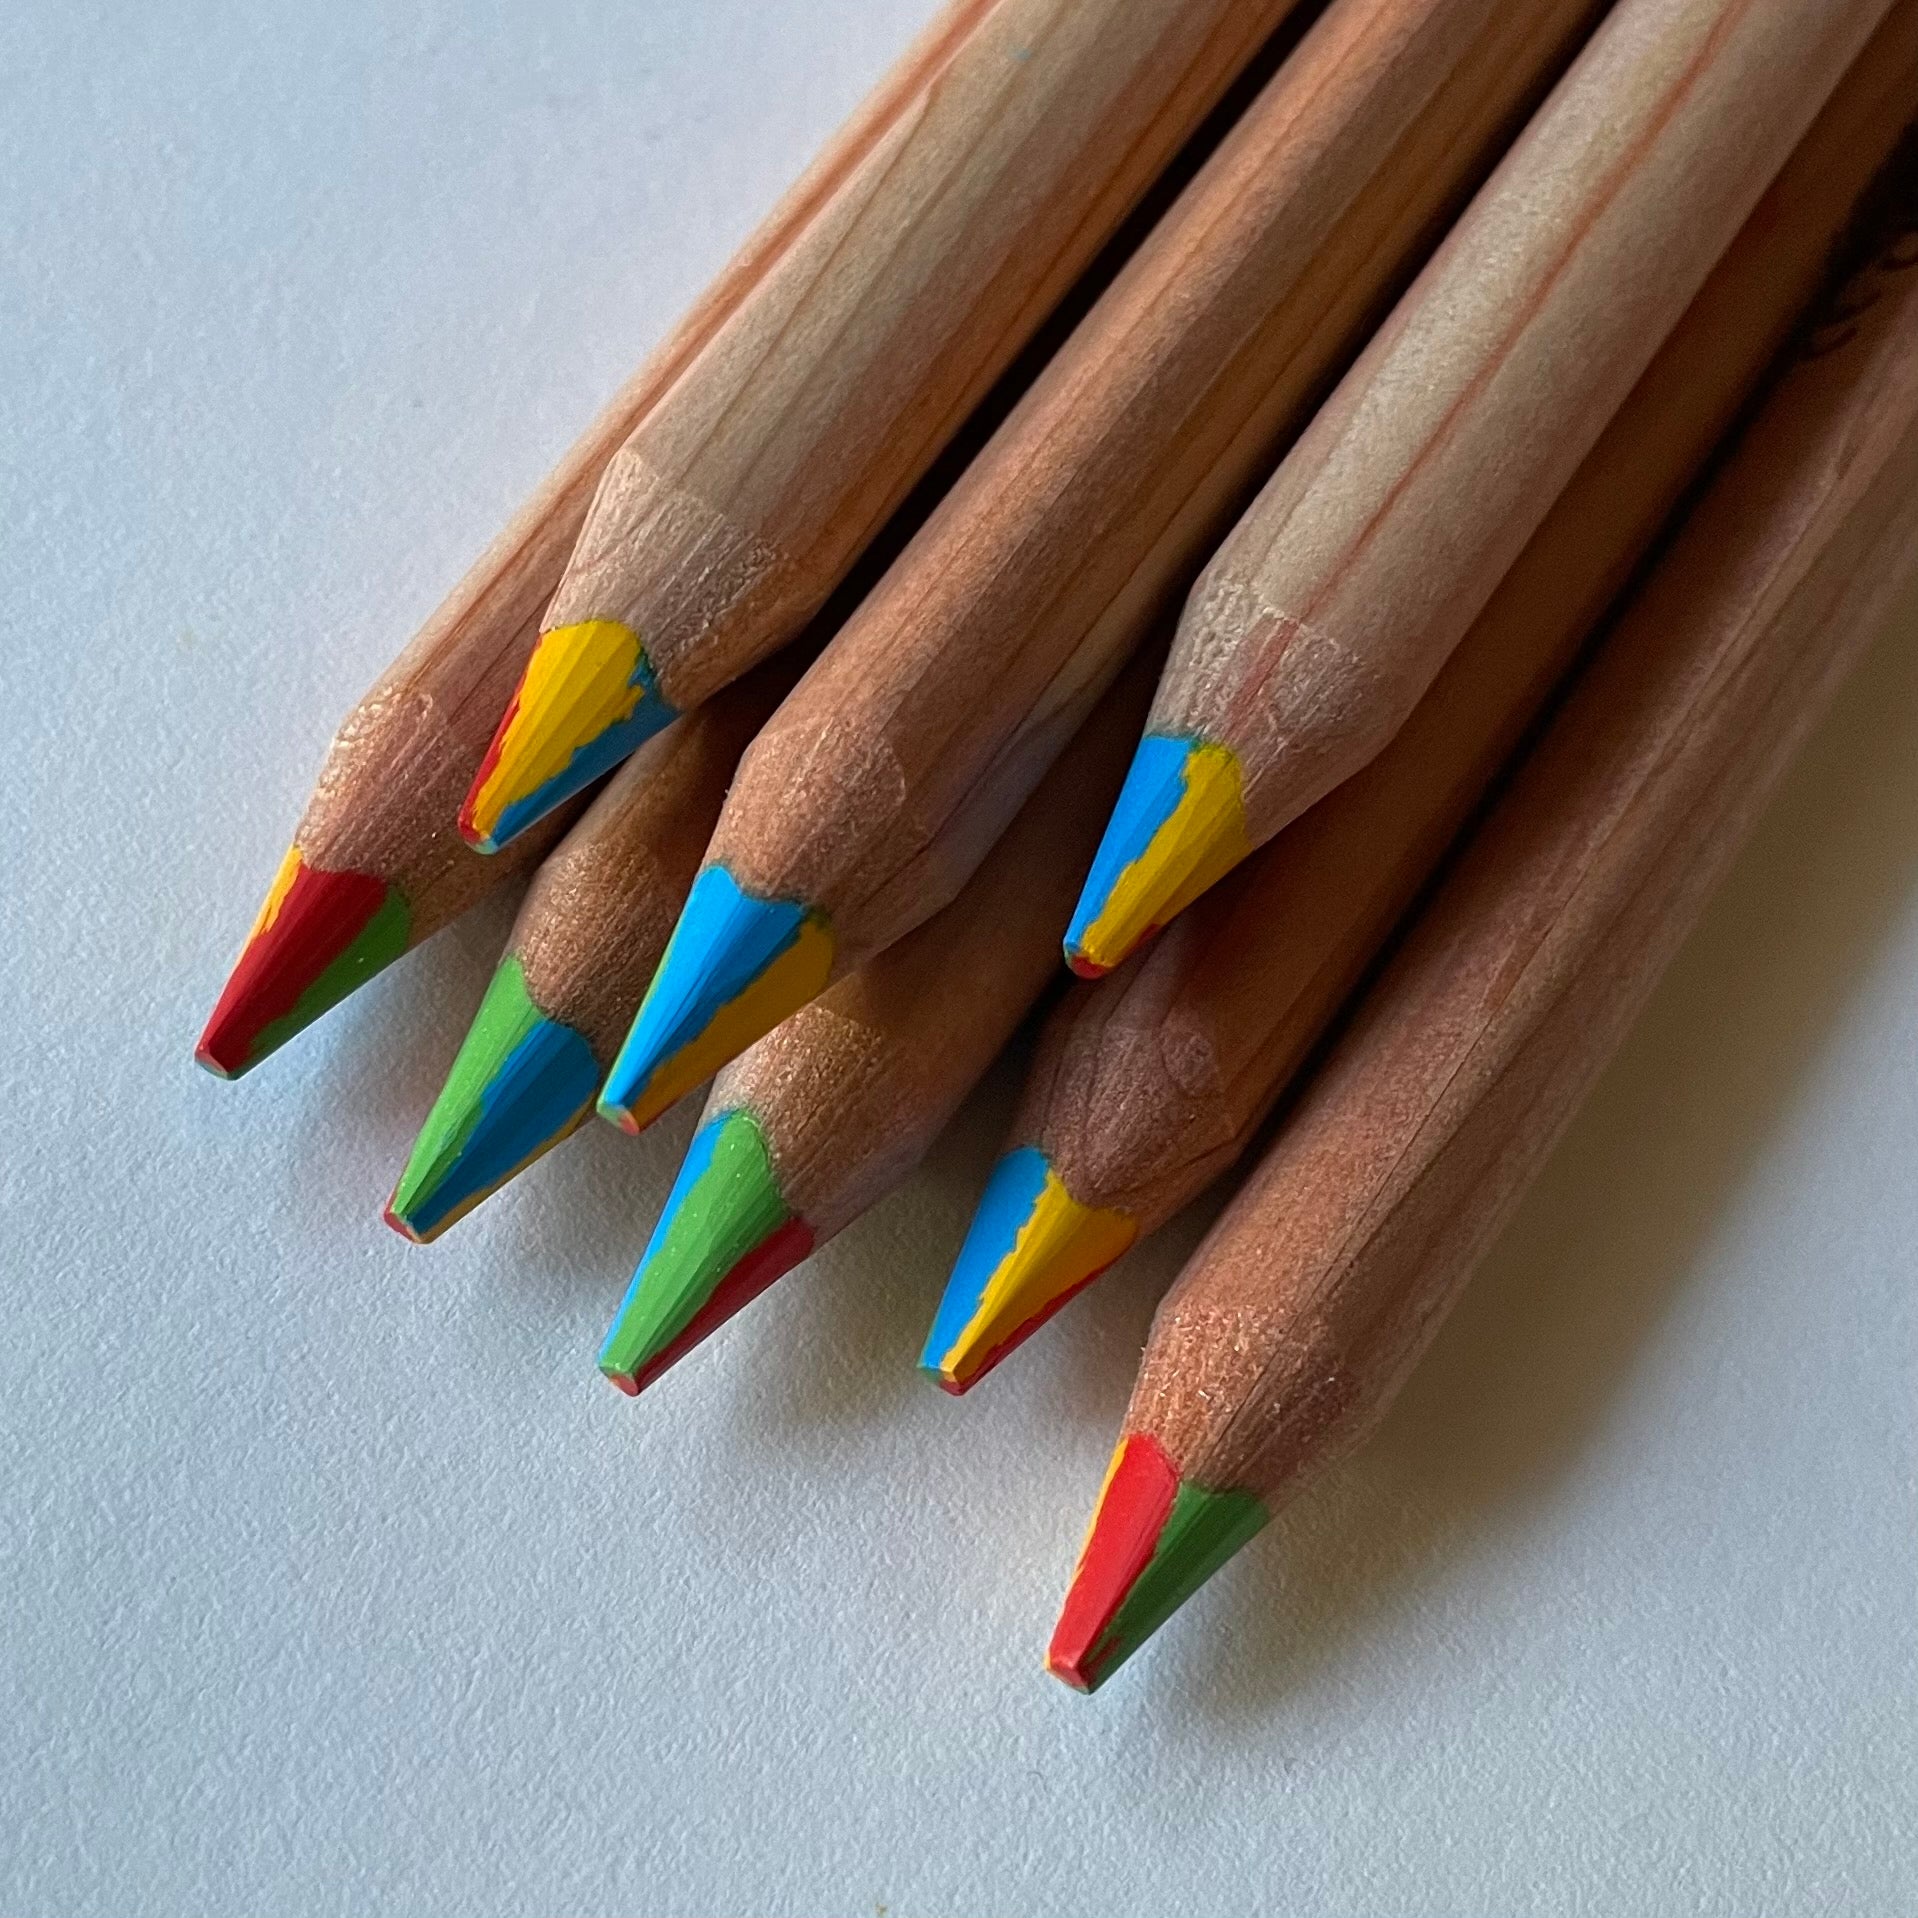 LYRA Super FERBY 4 Color Triangular Pencil — A Lot Mall